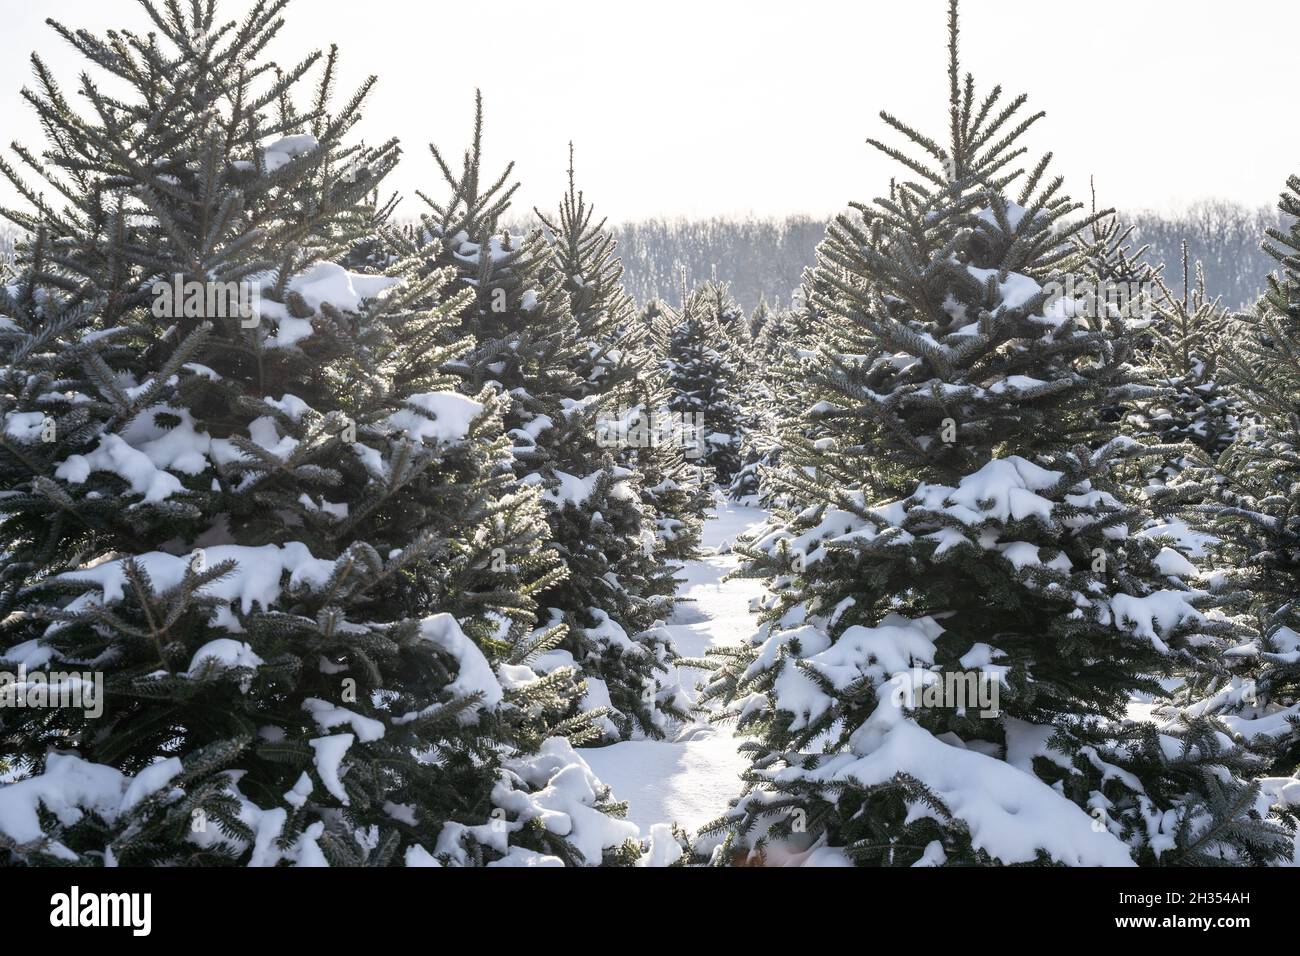 Snow covered trees at Christmas tree farm. Stock Photo